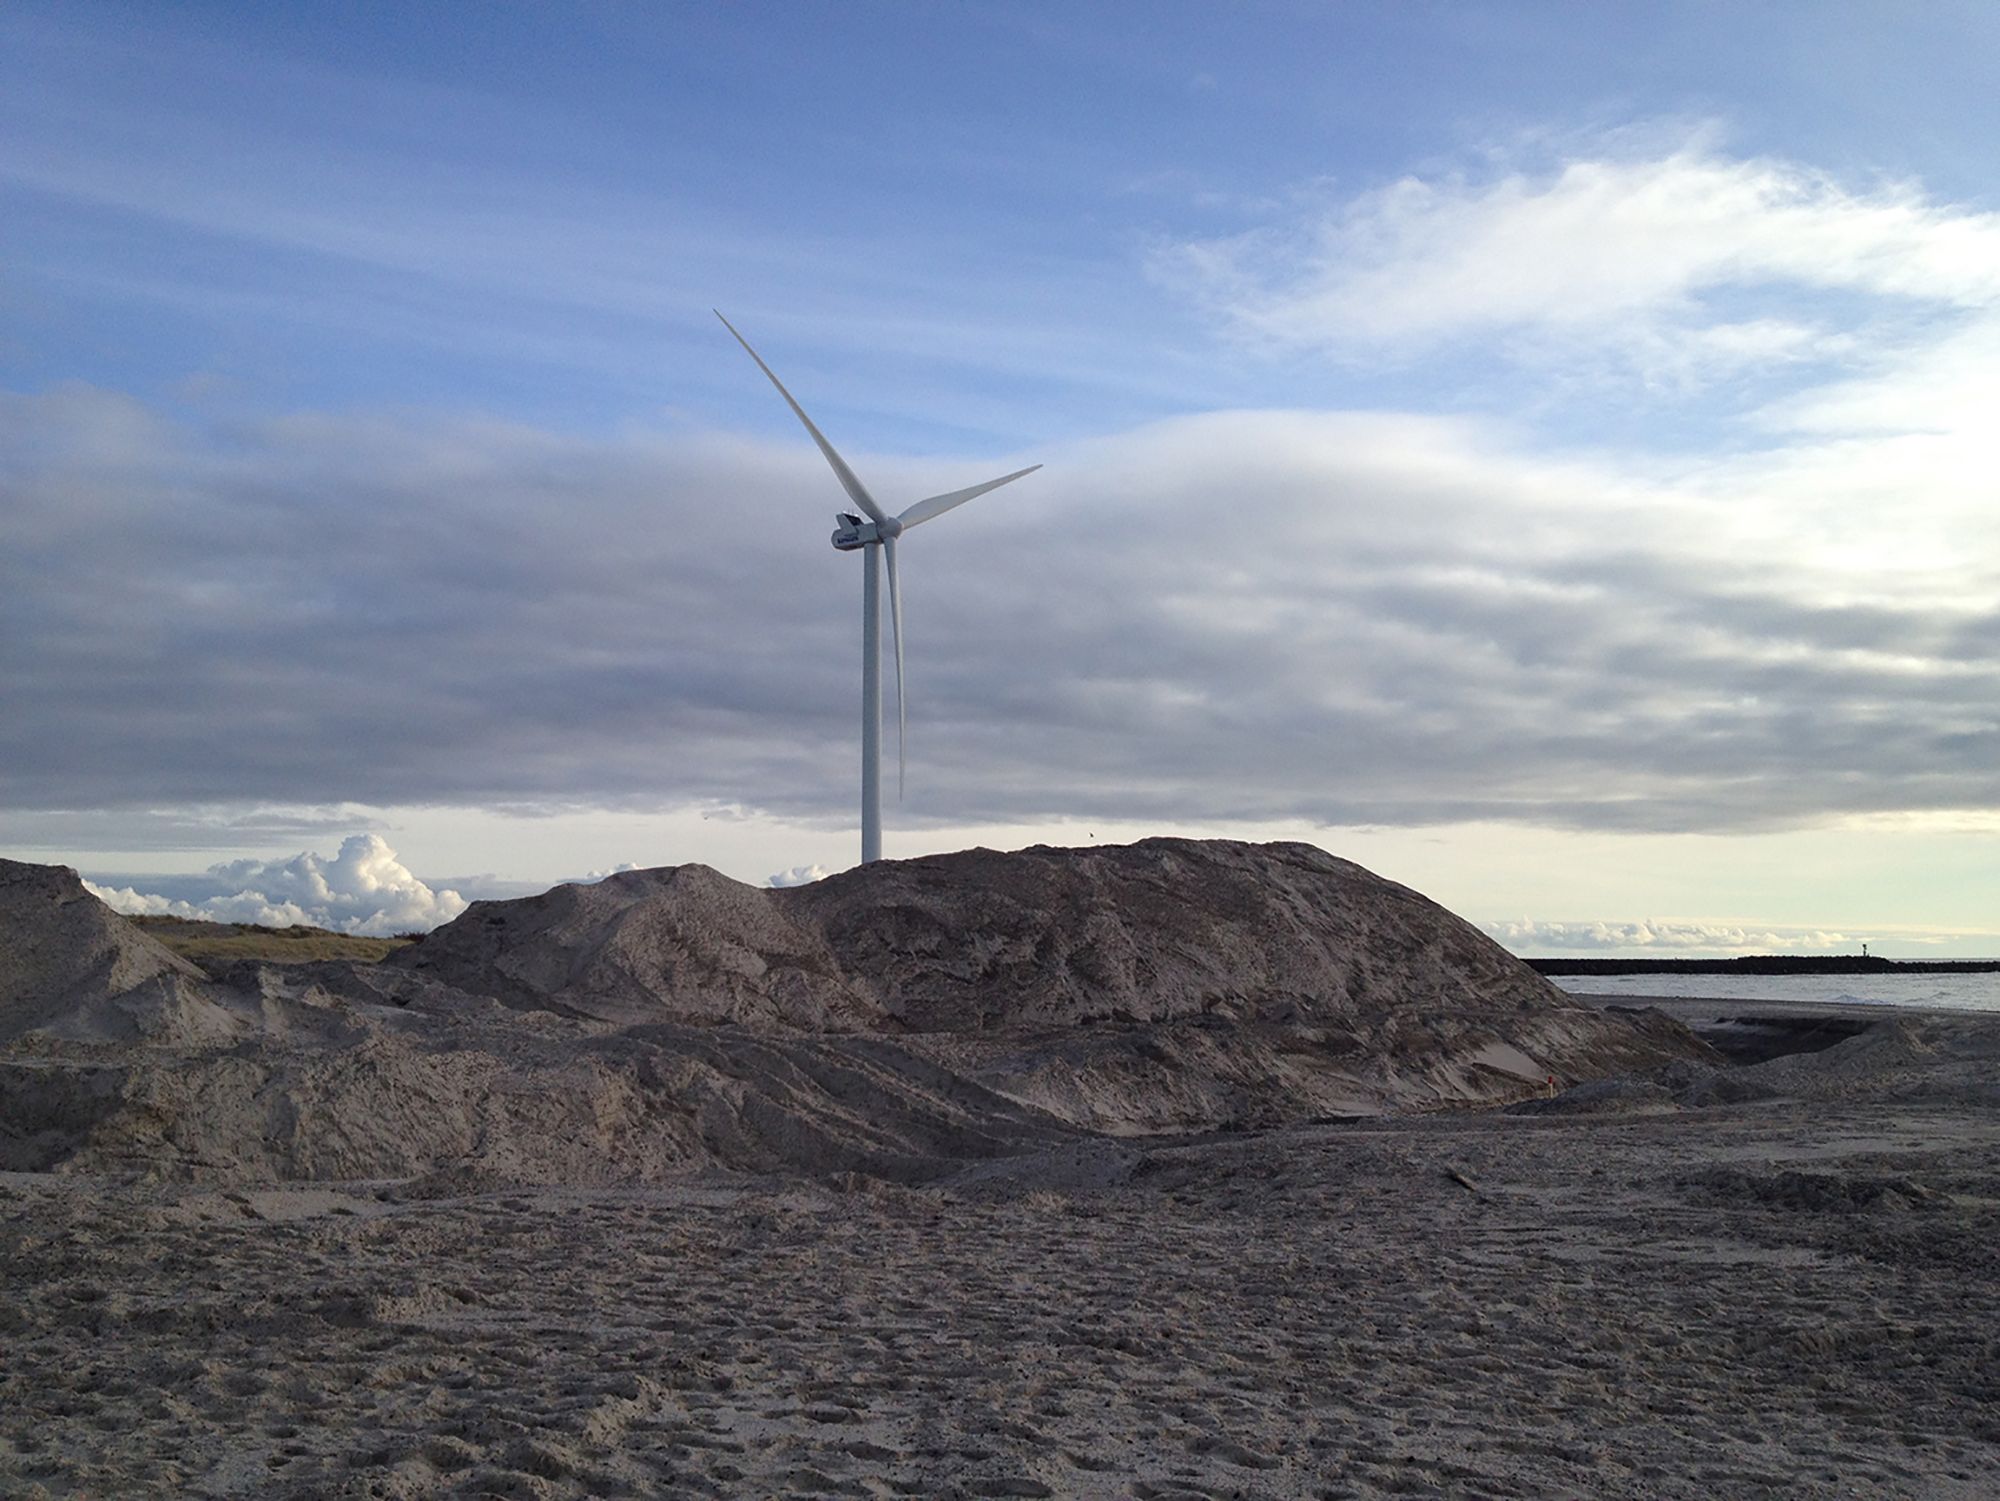 A color photograph of a wind turbine on the beach.